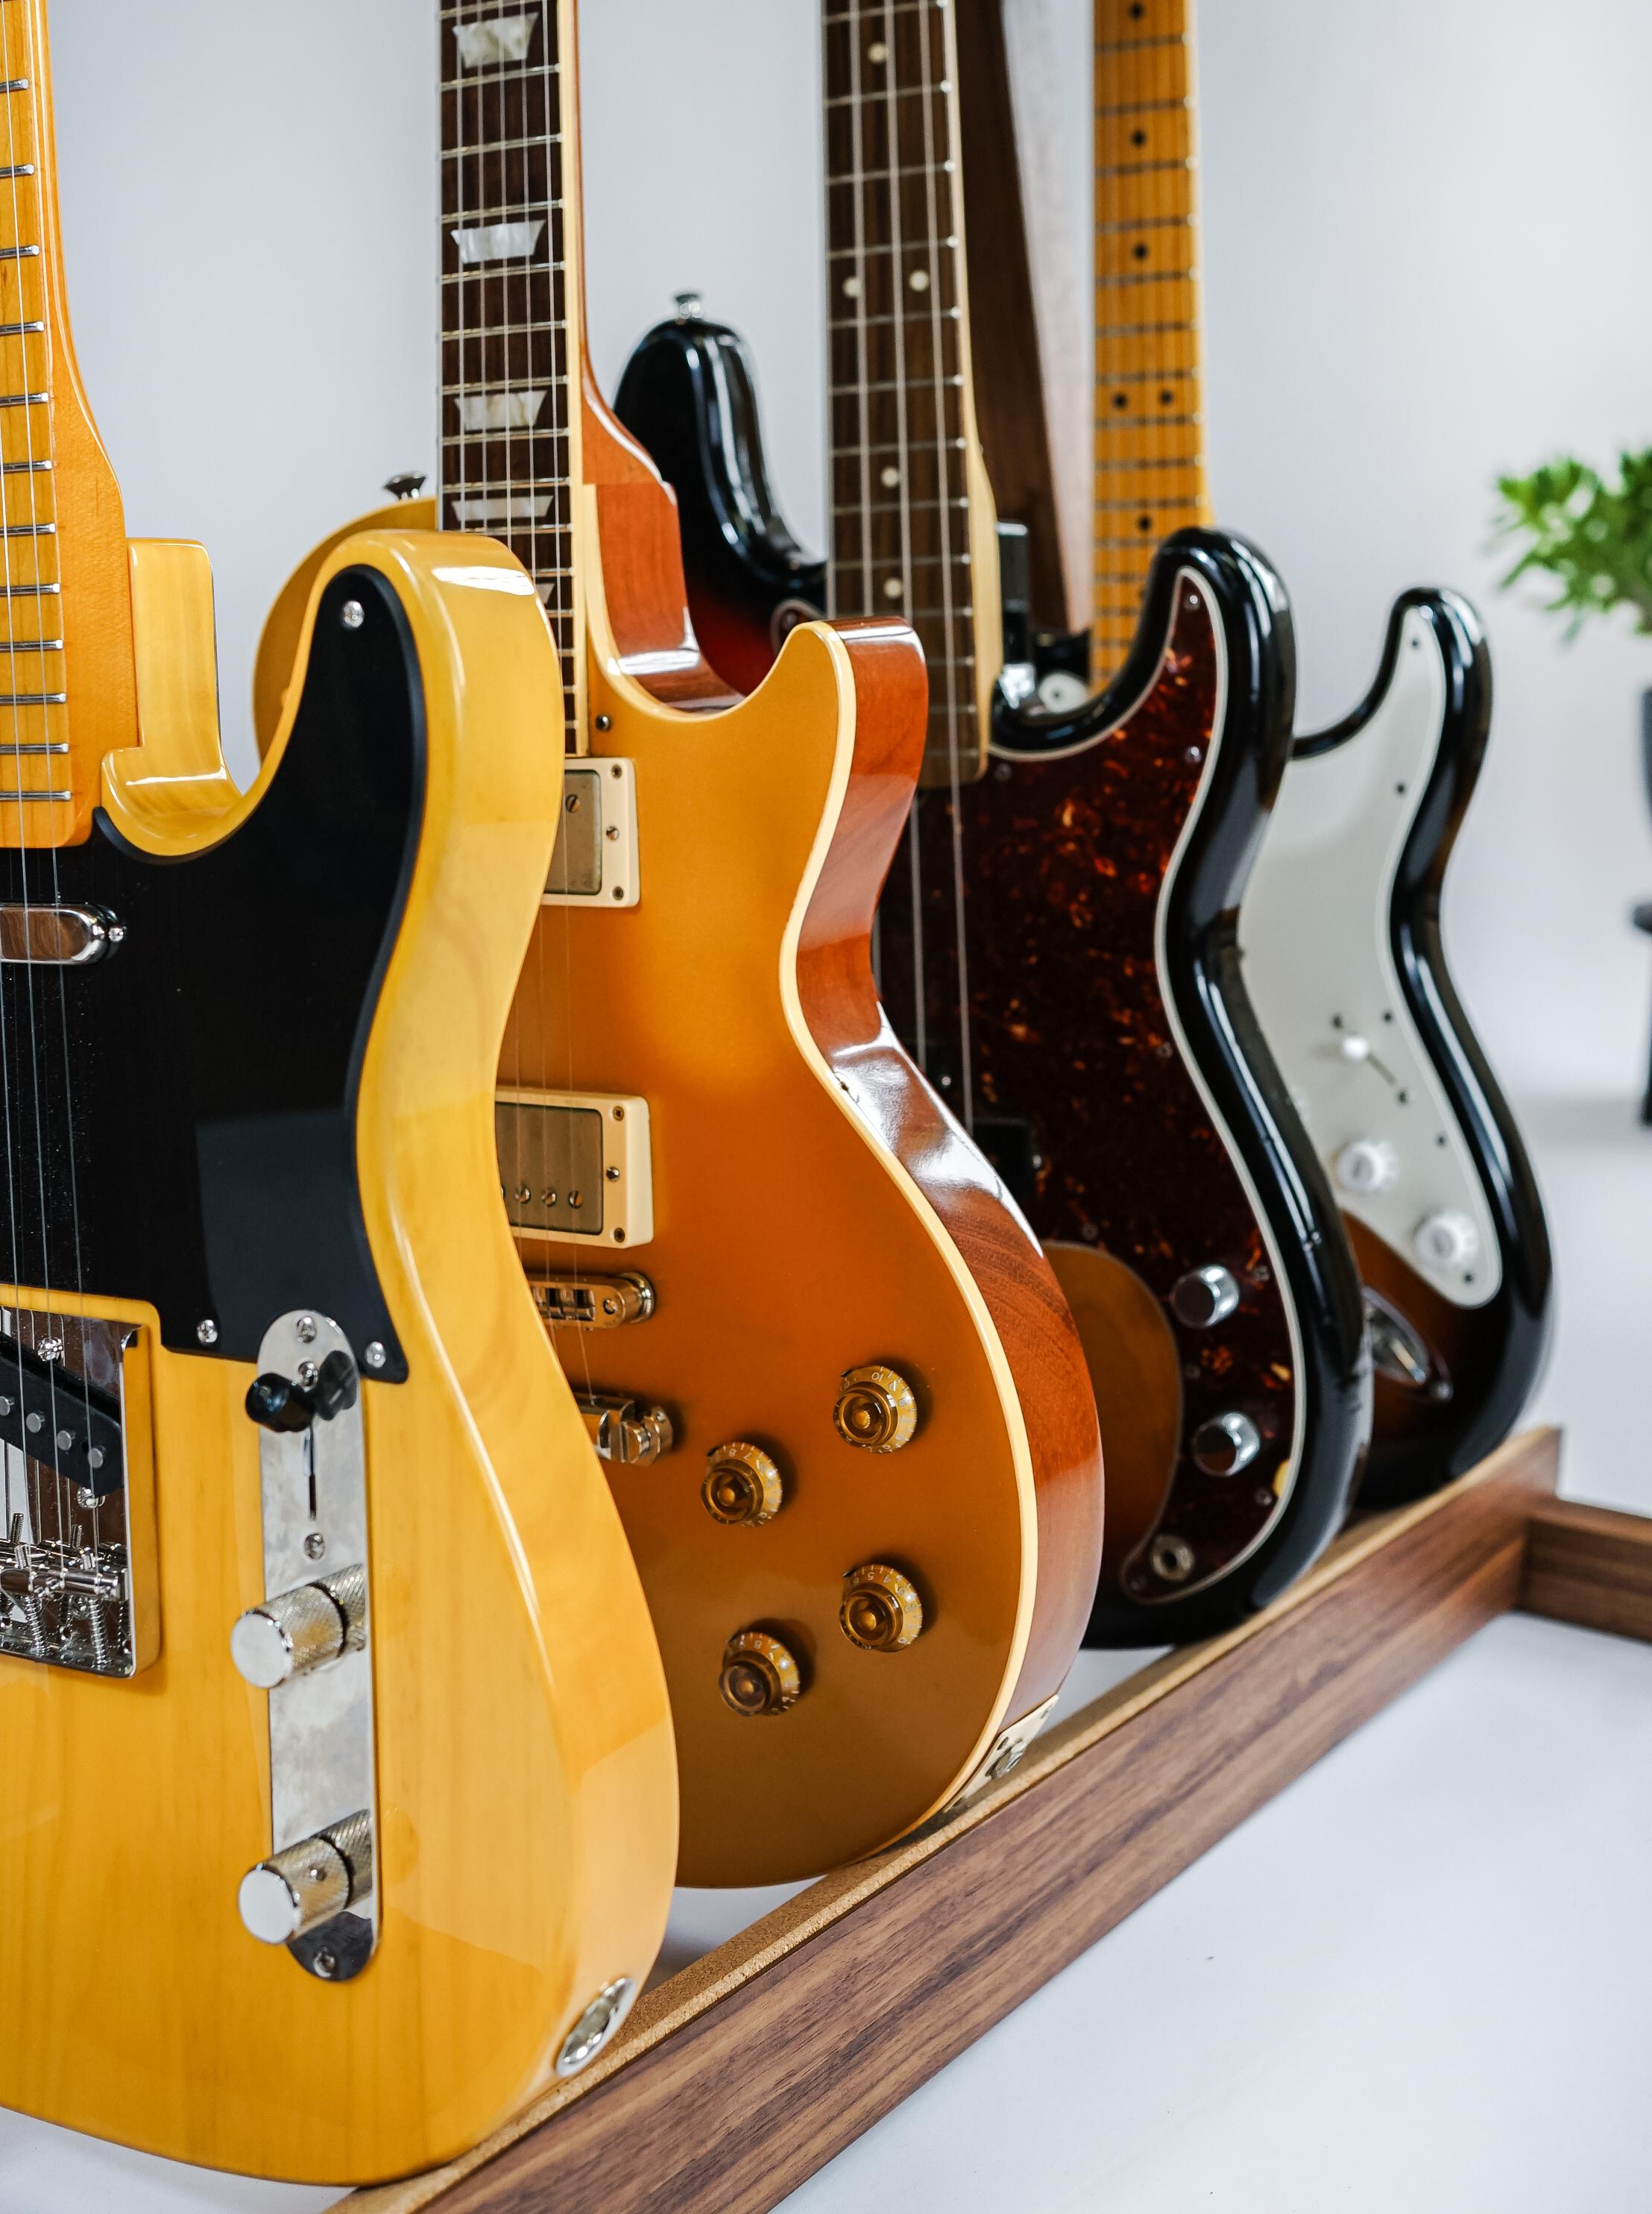 American Modern Wooden Guitar Stand - Olin Model Guitar Display